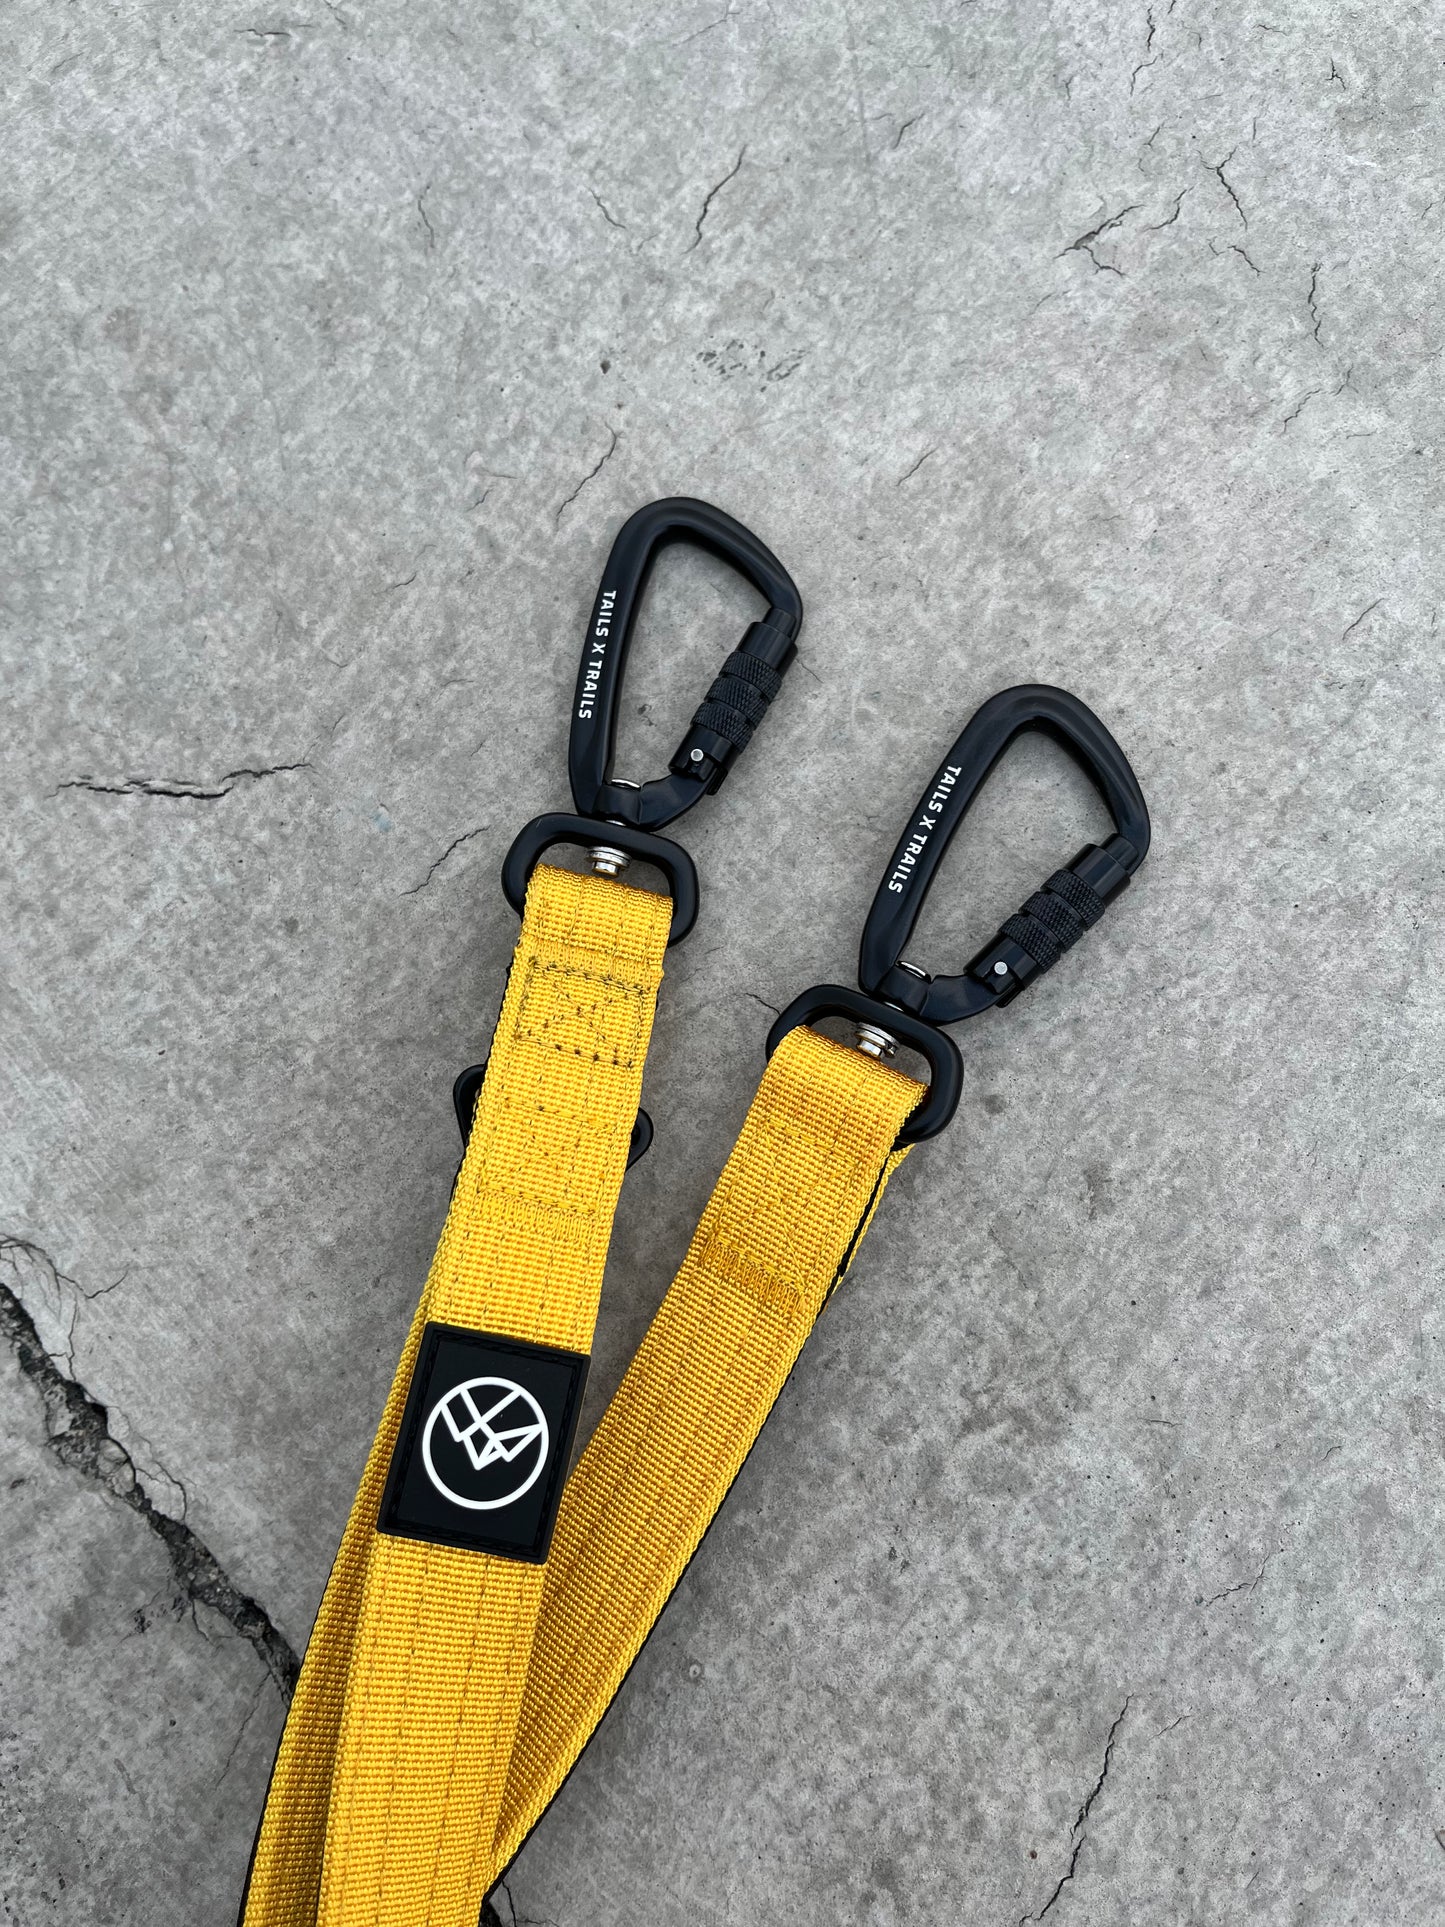 dog leash yellow carabiner clip heavy duty